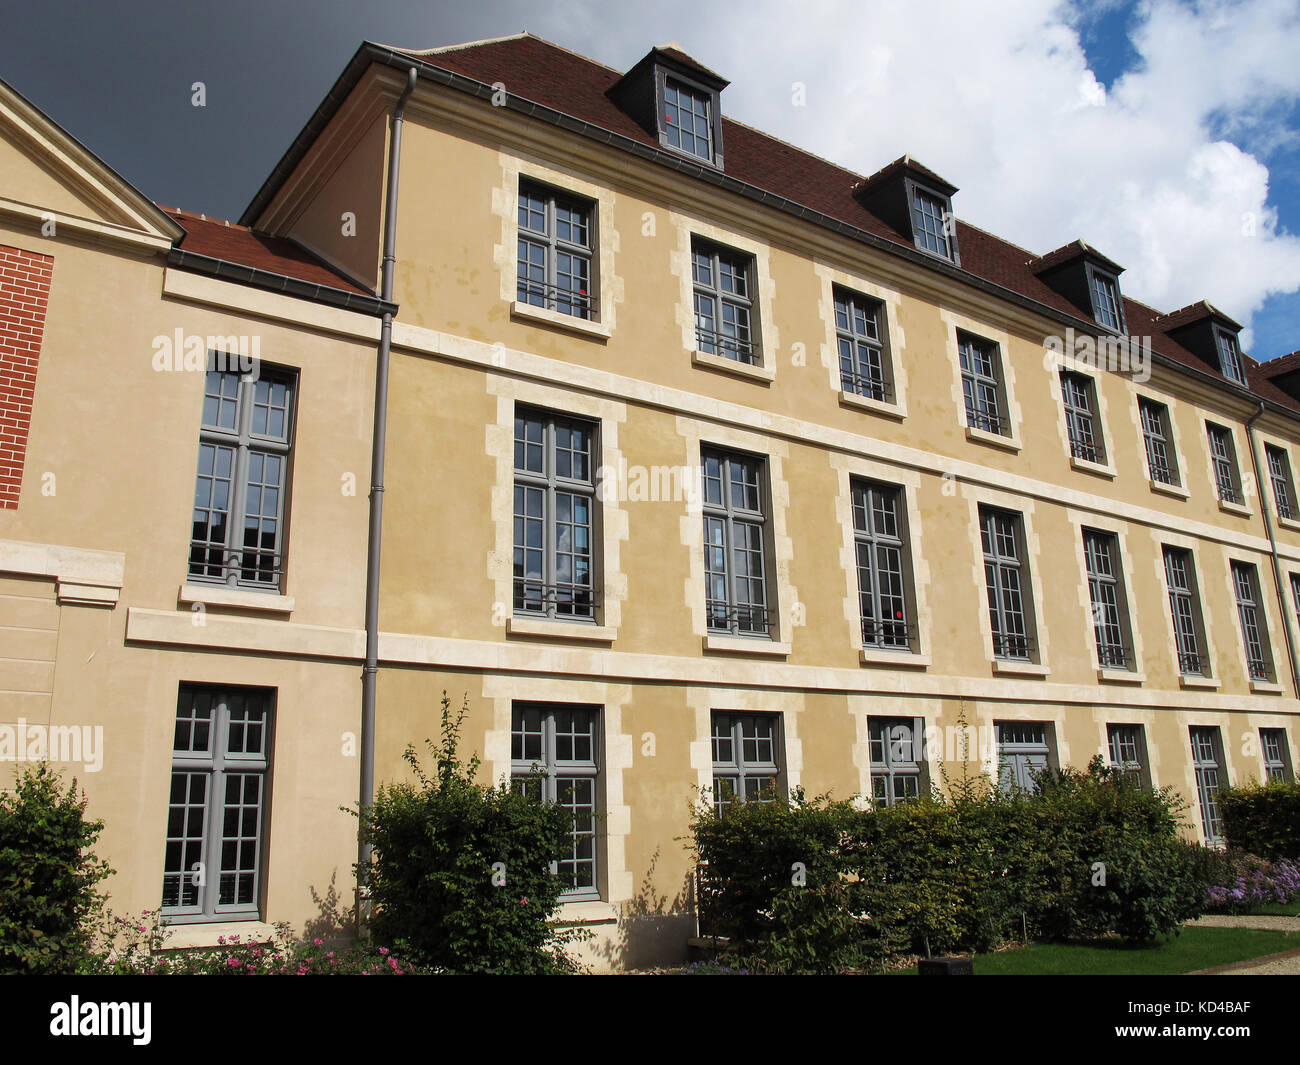 Ancien hôpital laennec, siège de kering et Balenciaga, Paris, France,  Europe Photo Stock - Alamy